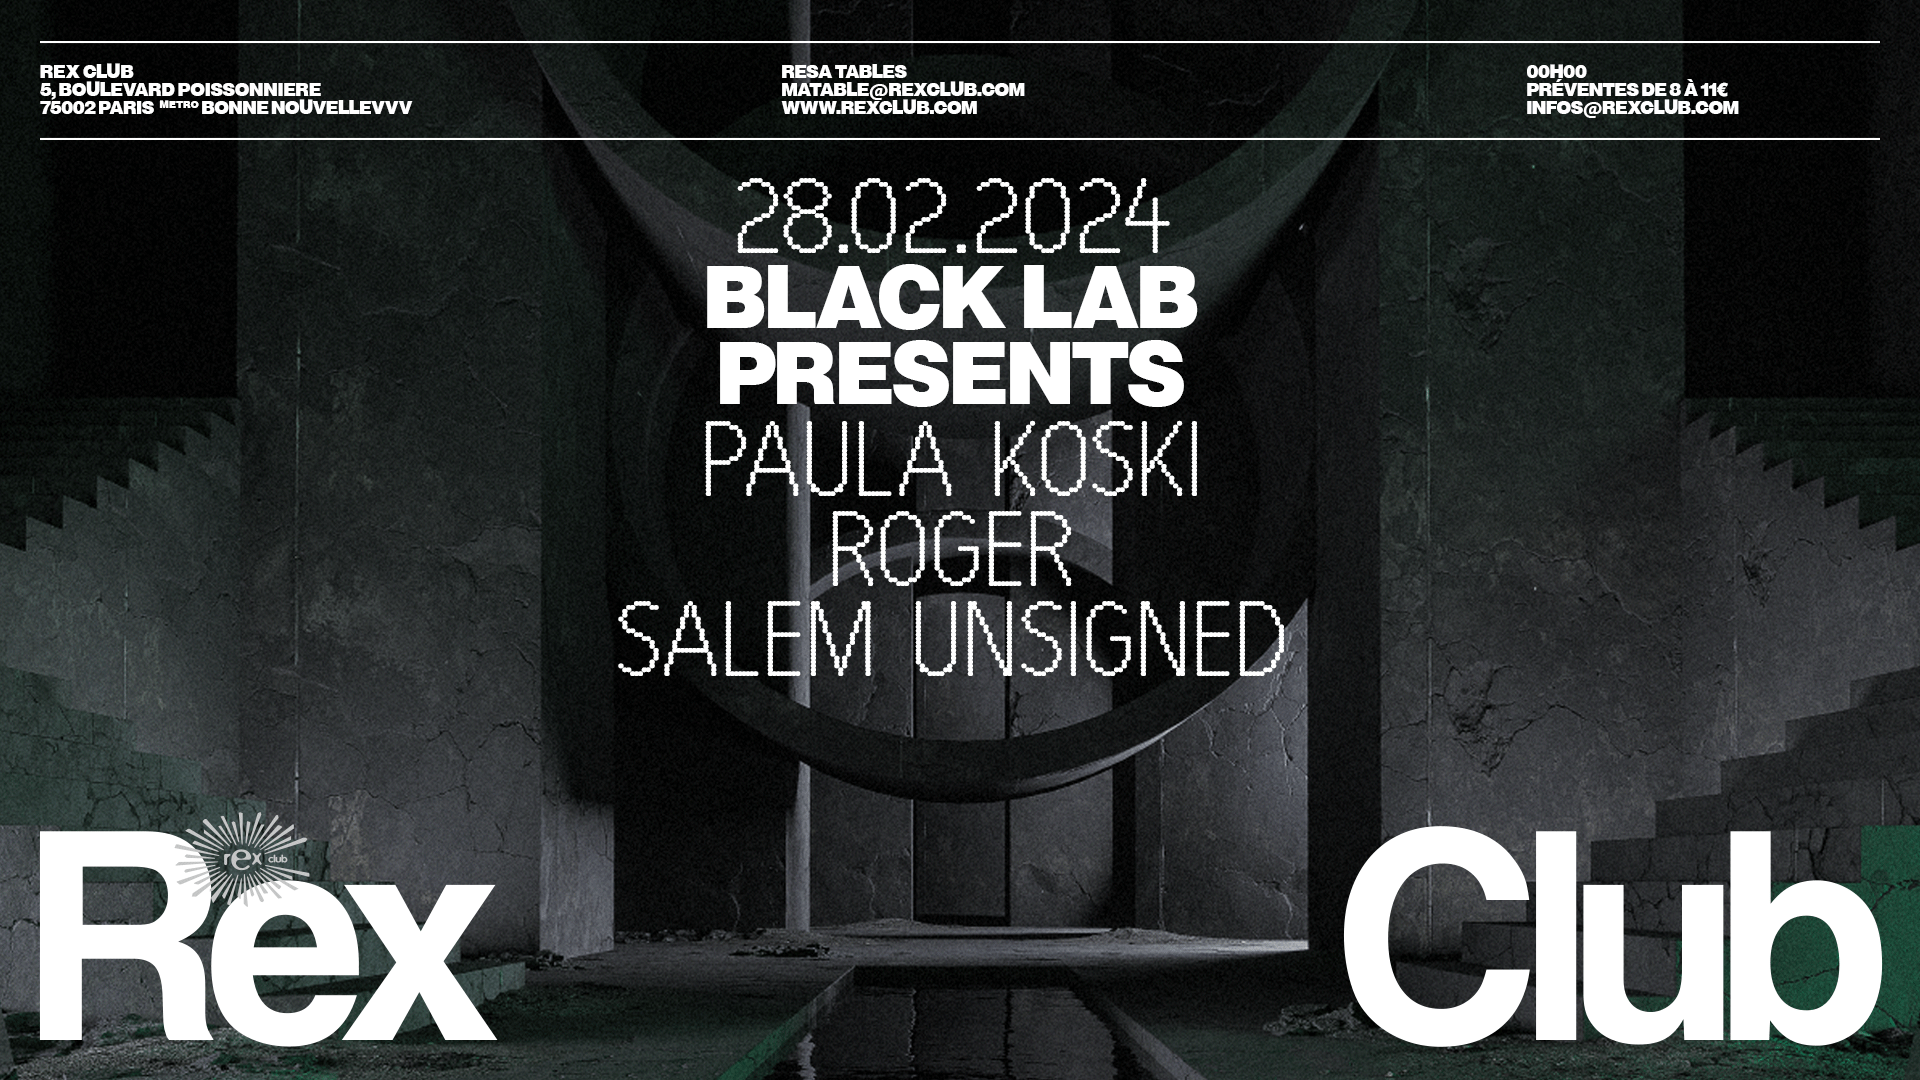 Black Lab presents: Paula Koski, Roger, Salem Unsigned - フライヤー表